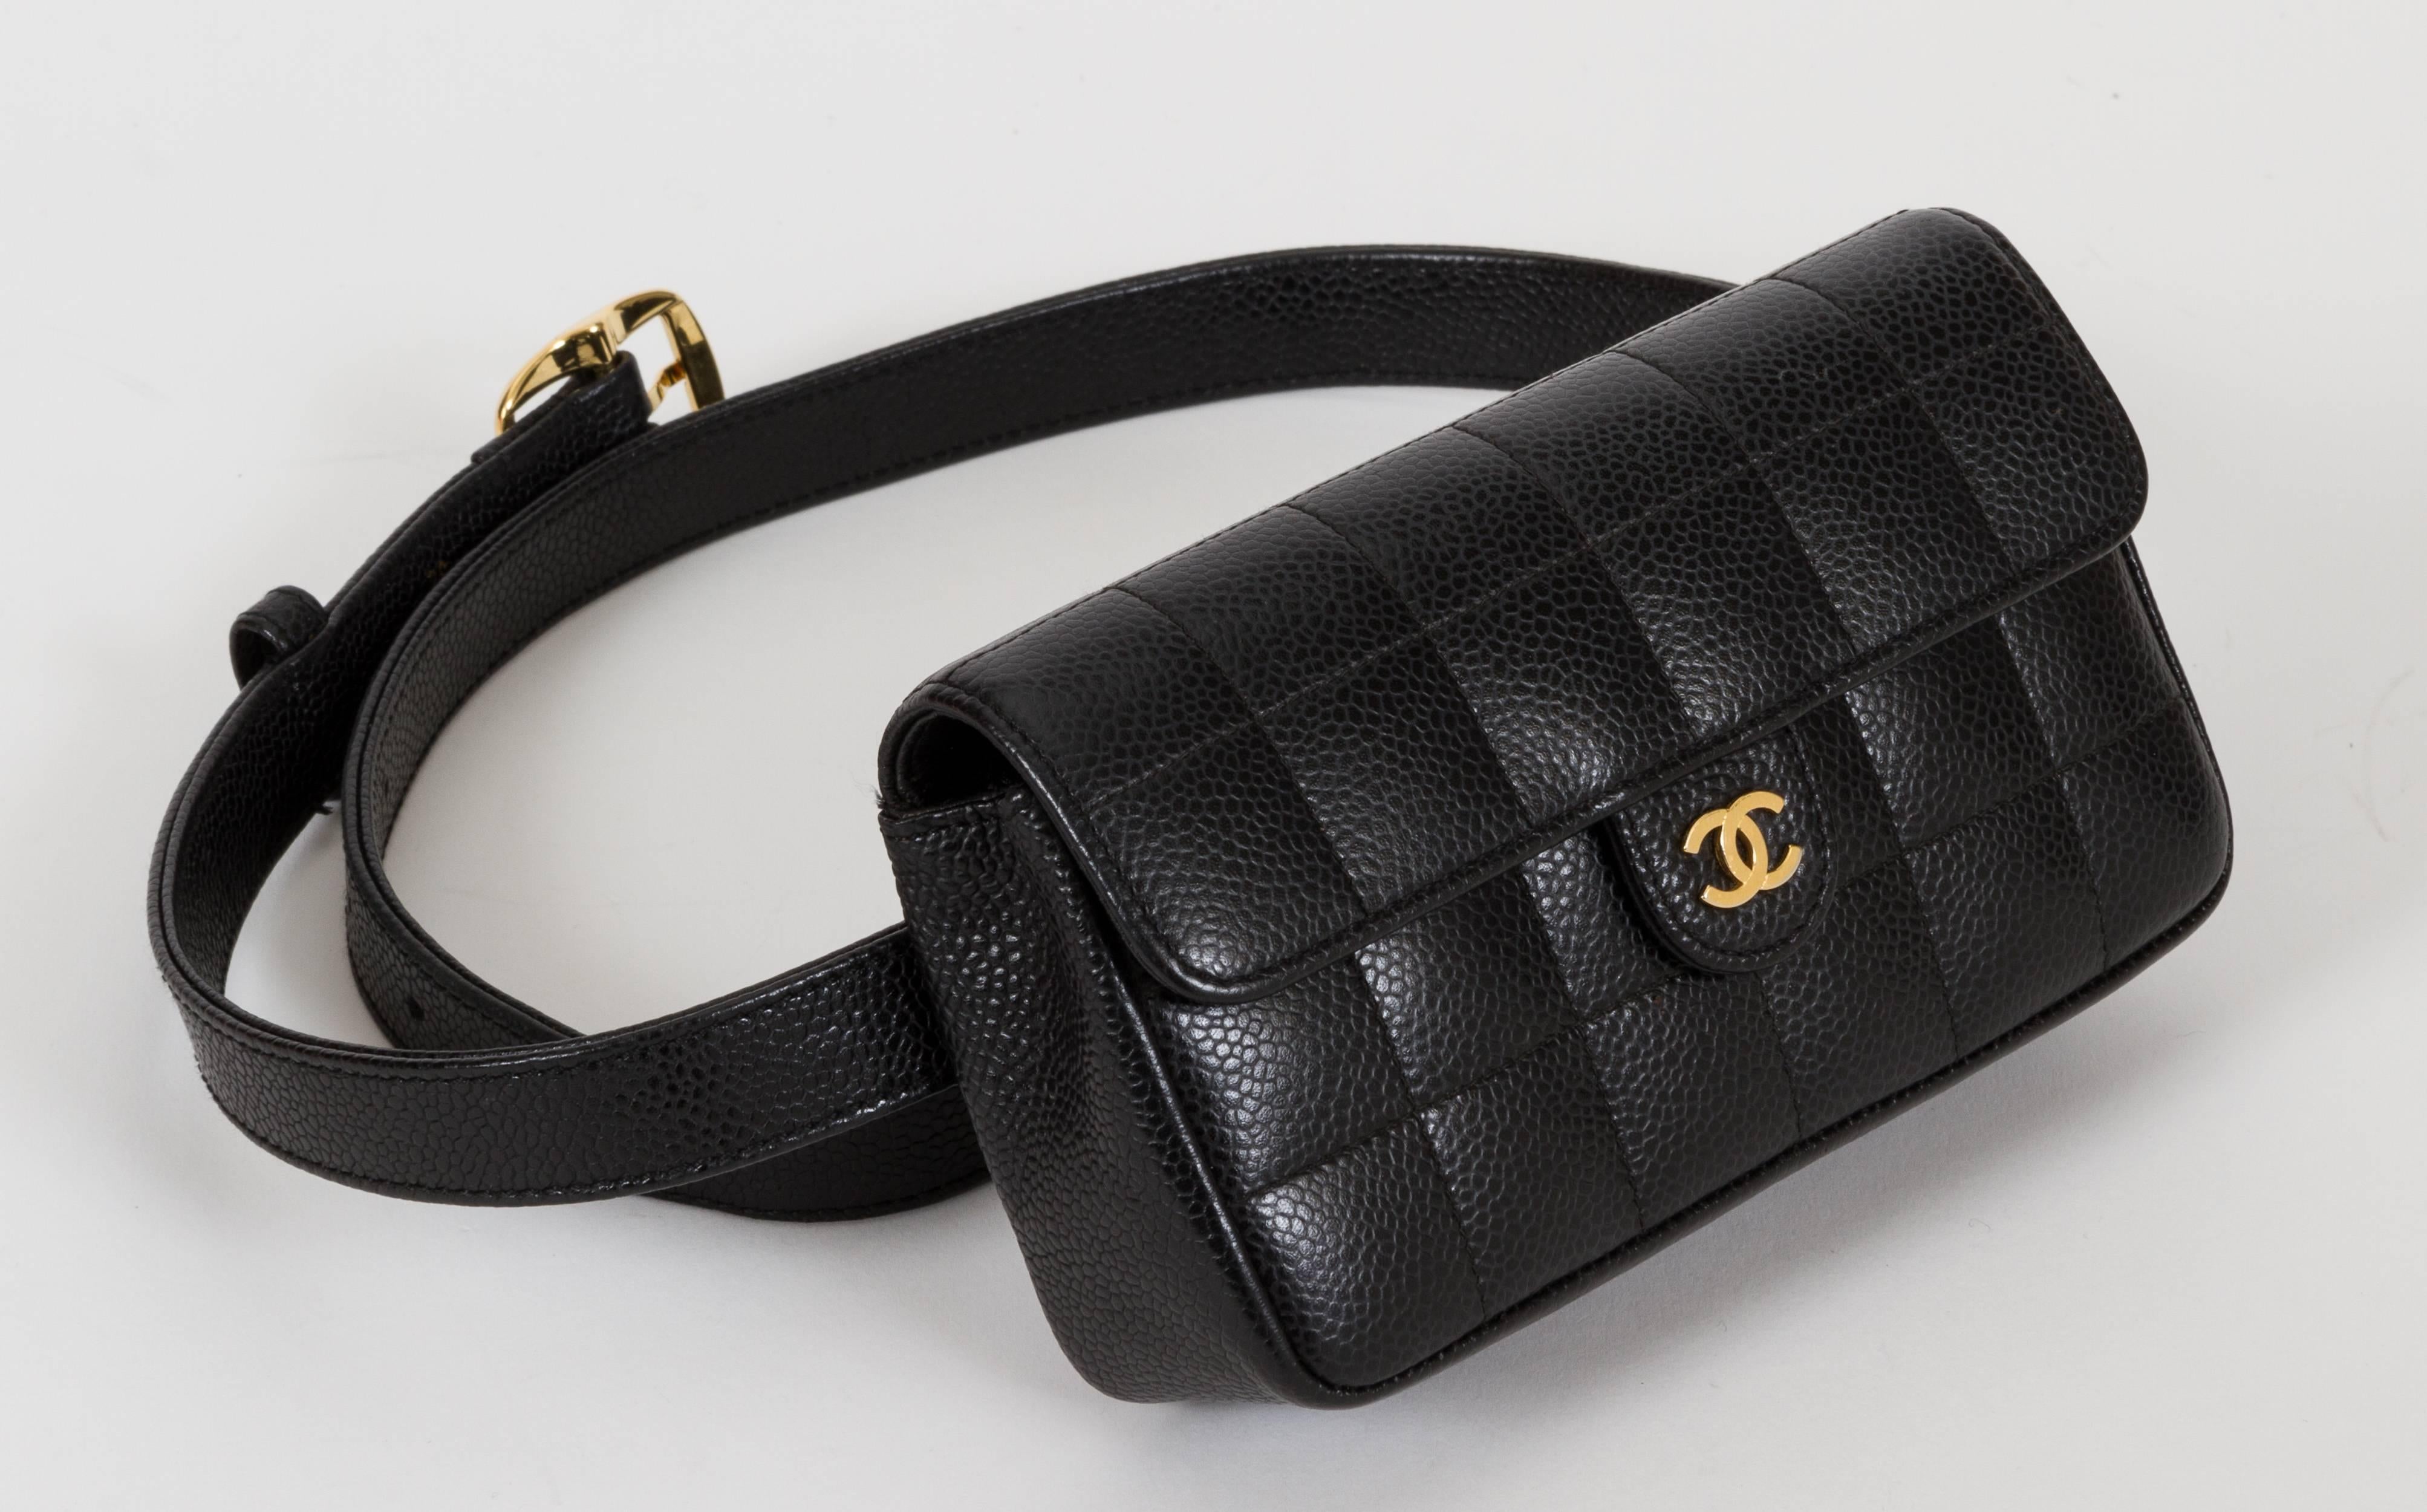 Chanel black quilted fanny pack with detachable belt. Belt length 80cm /32